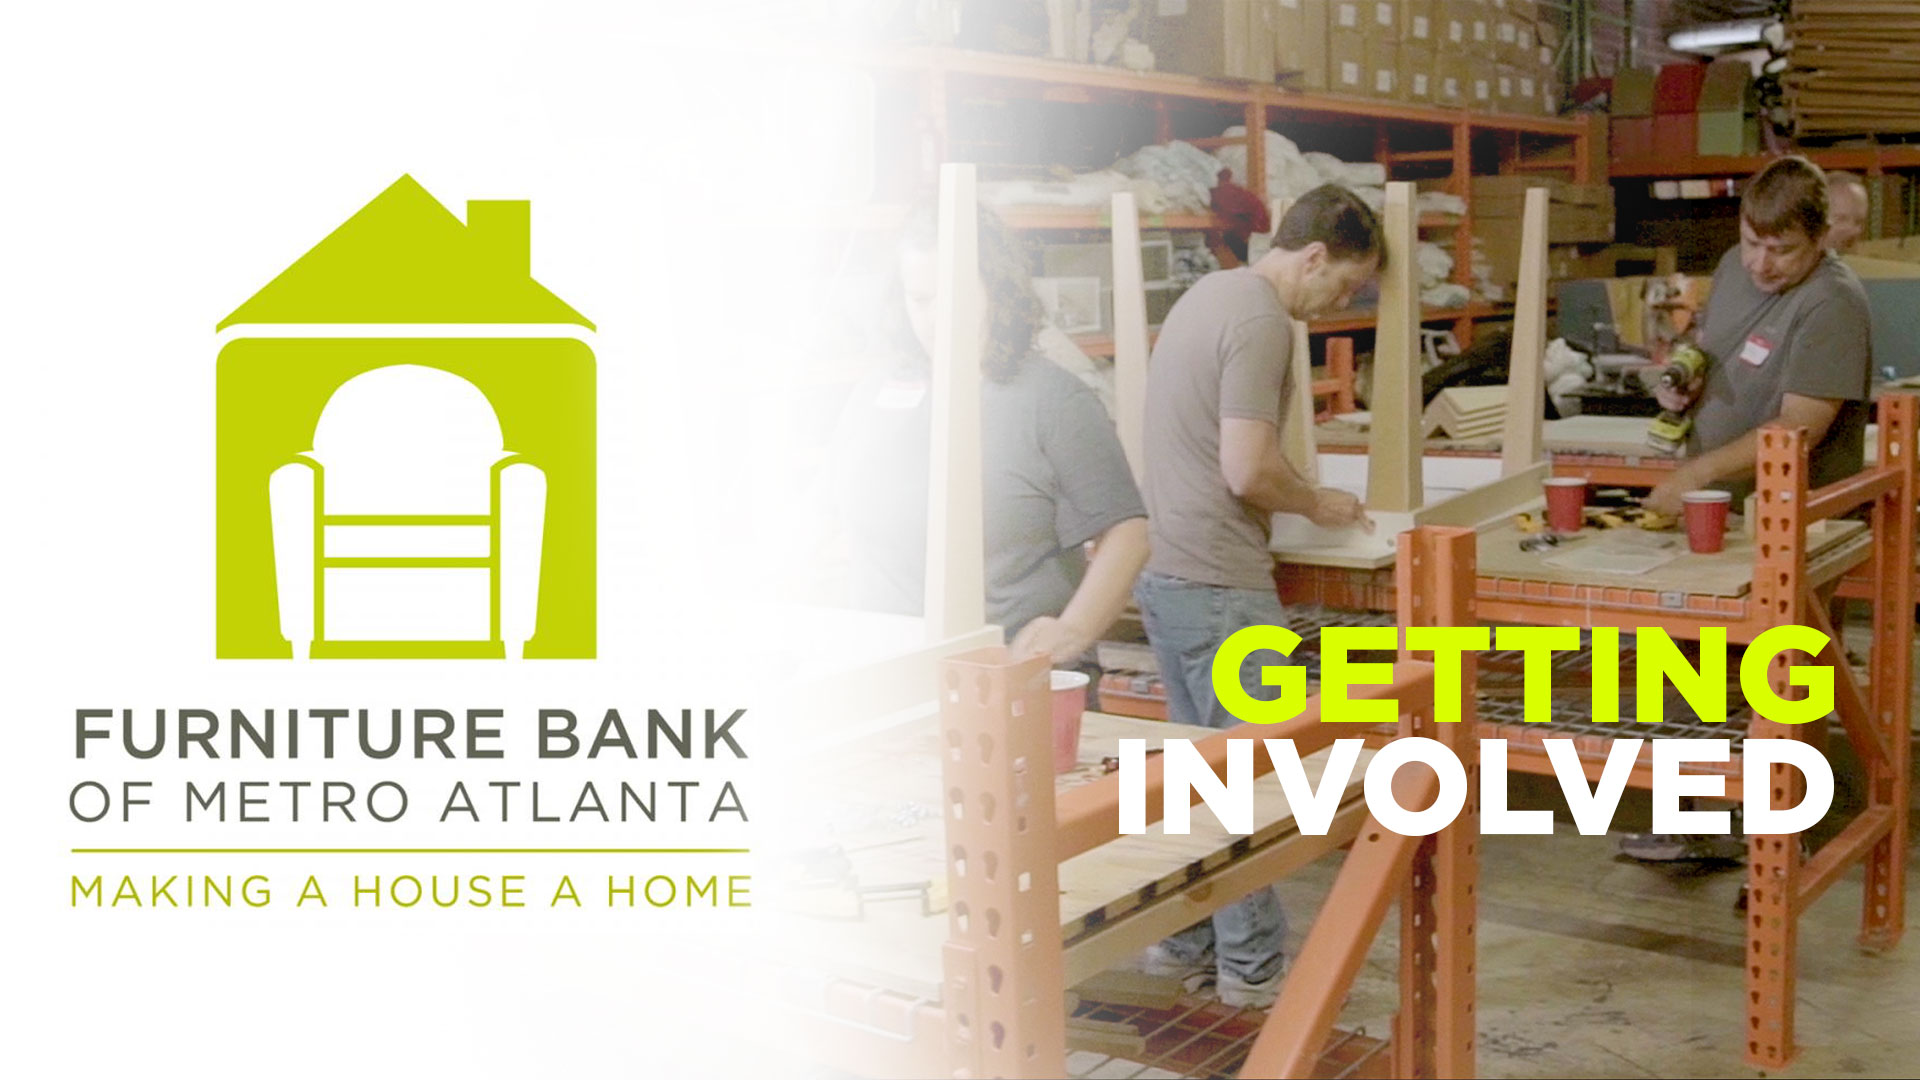 Furniture Bank Atlanta Get Involved Volunteering Story For